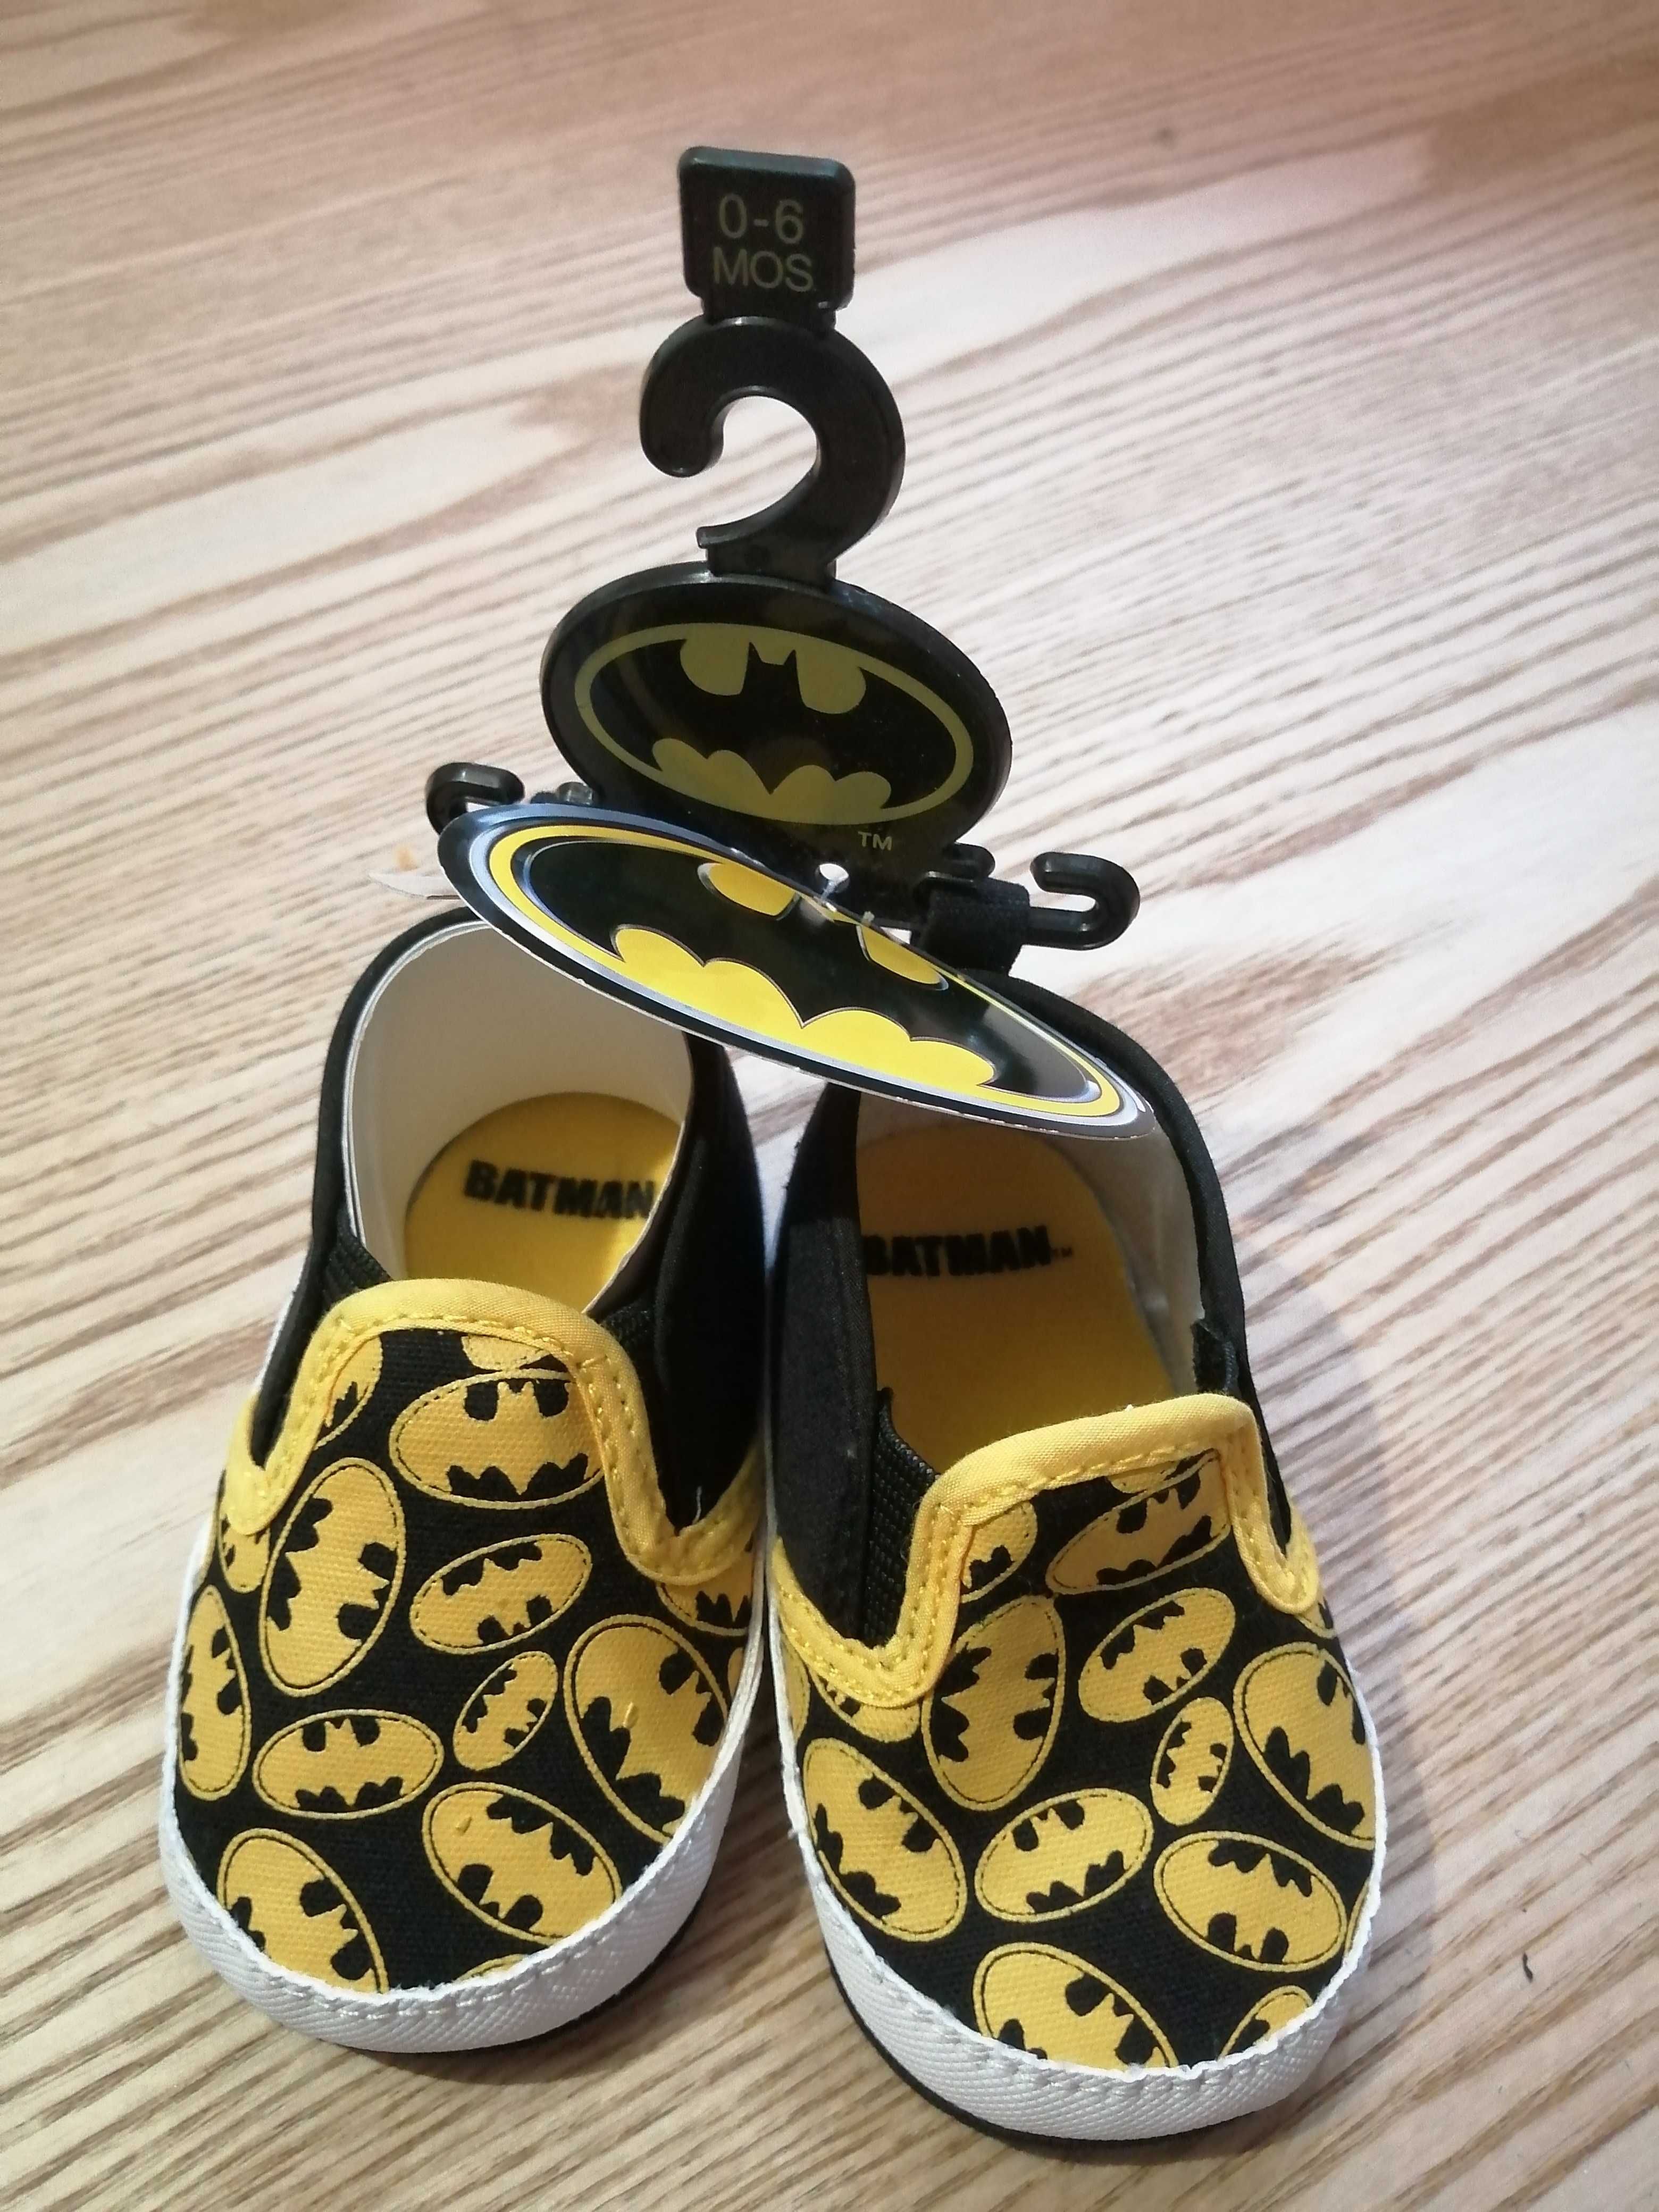 Nowe buciki niechodki Batman 0-6M